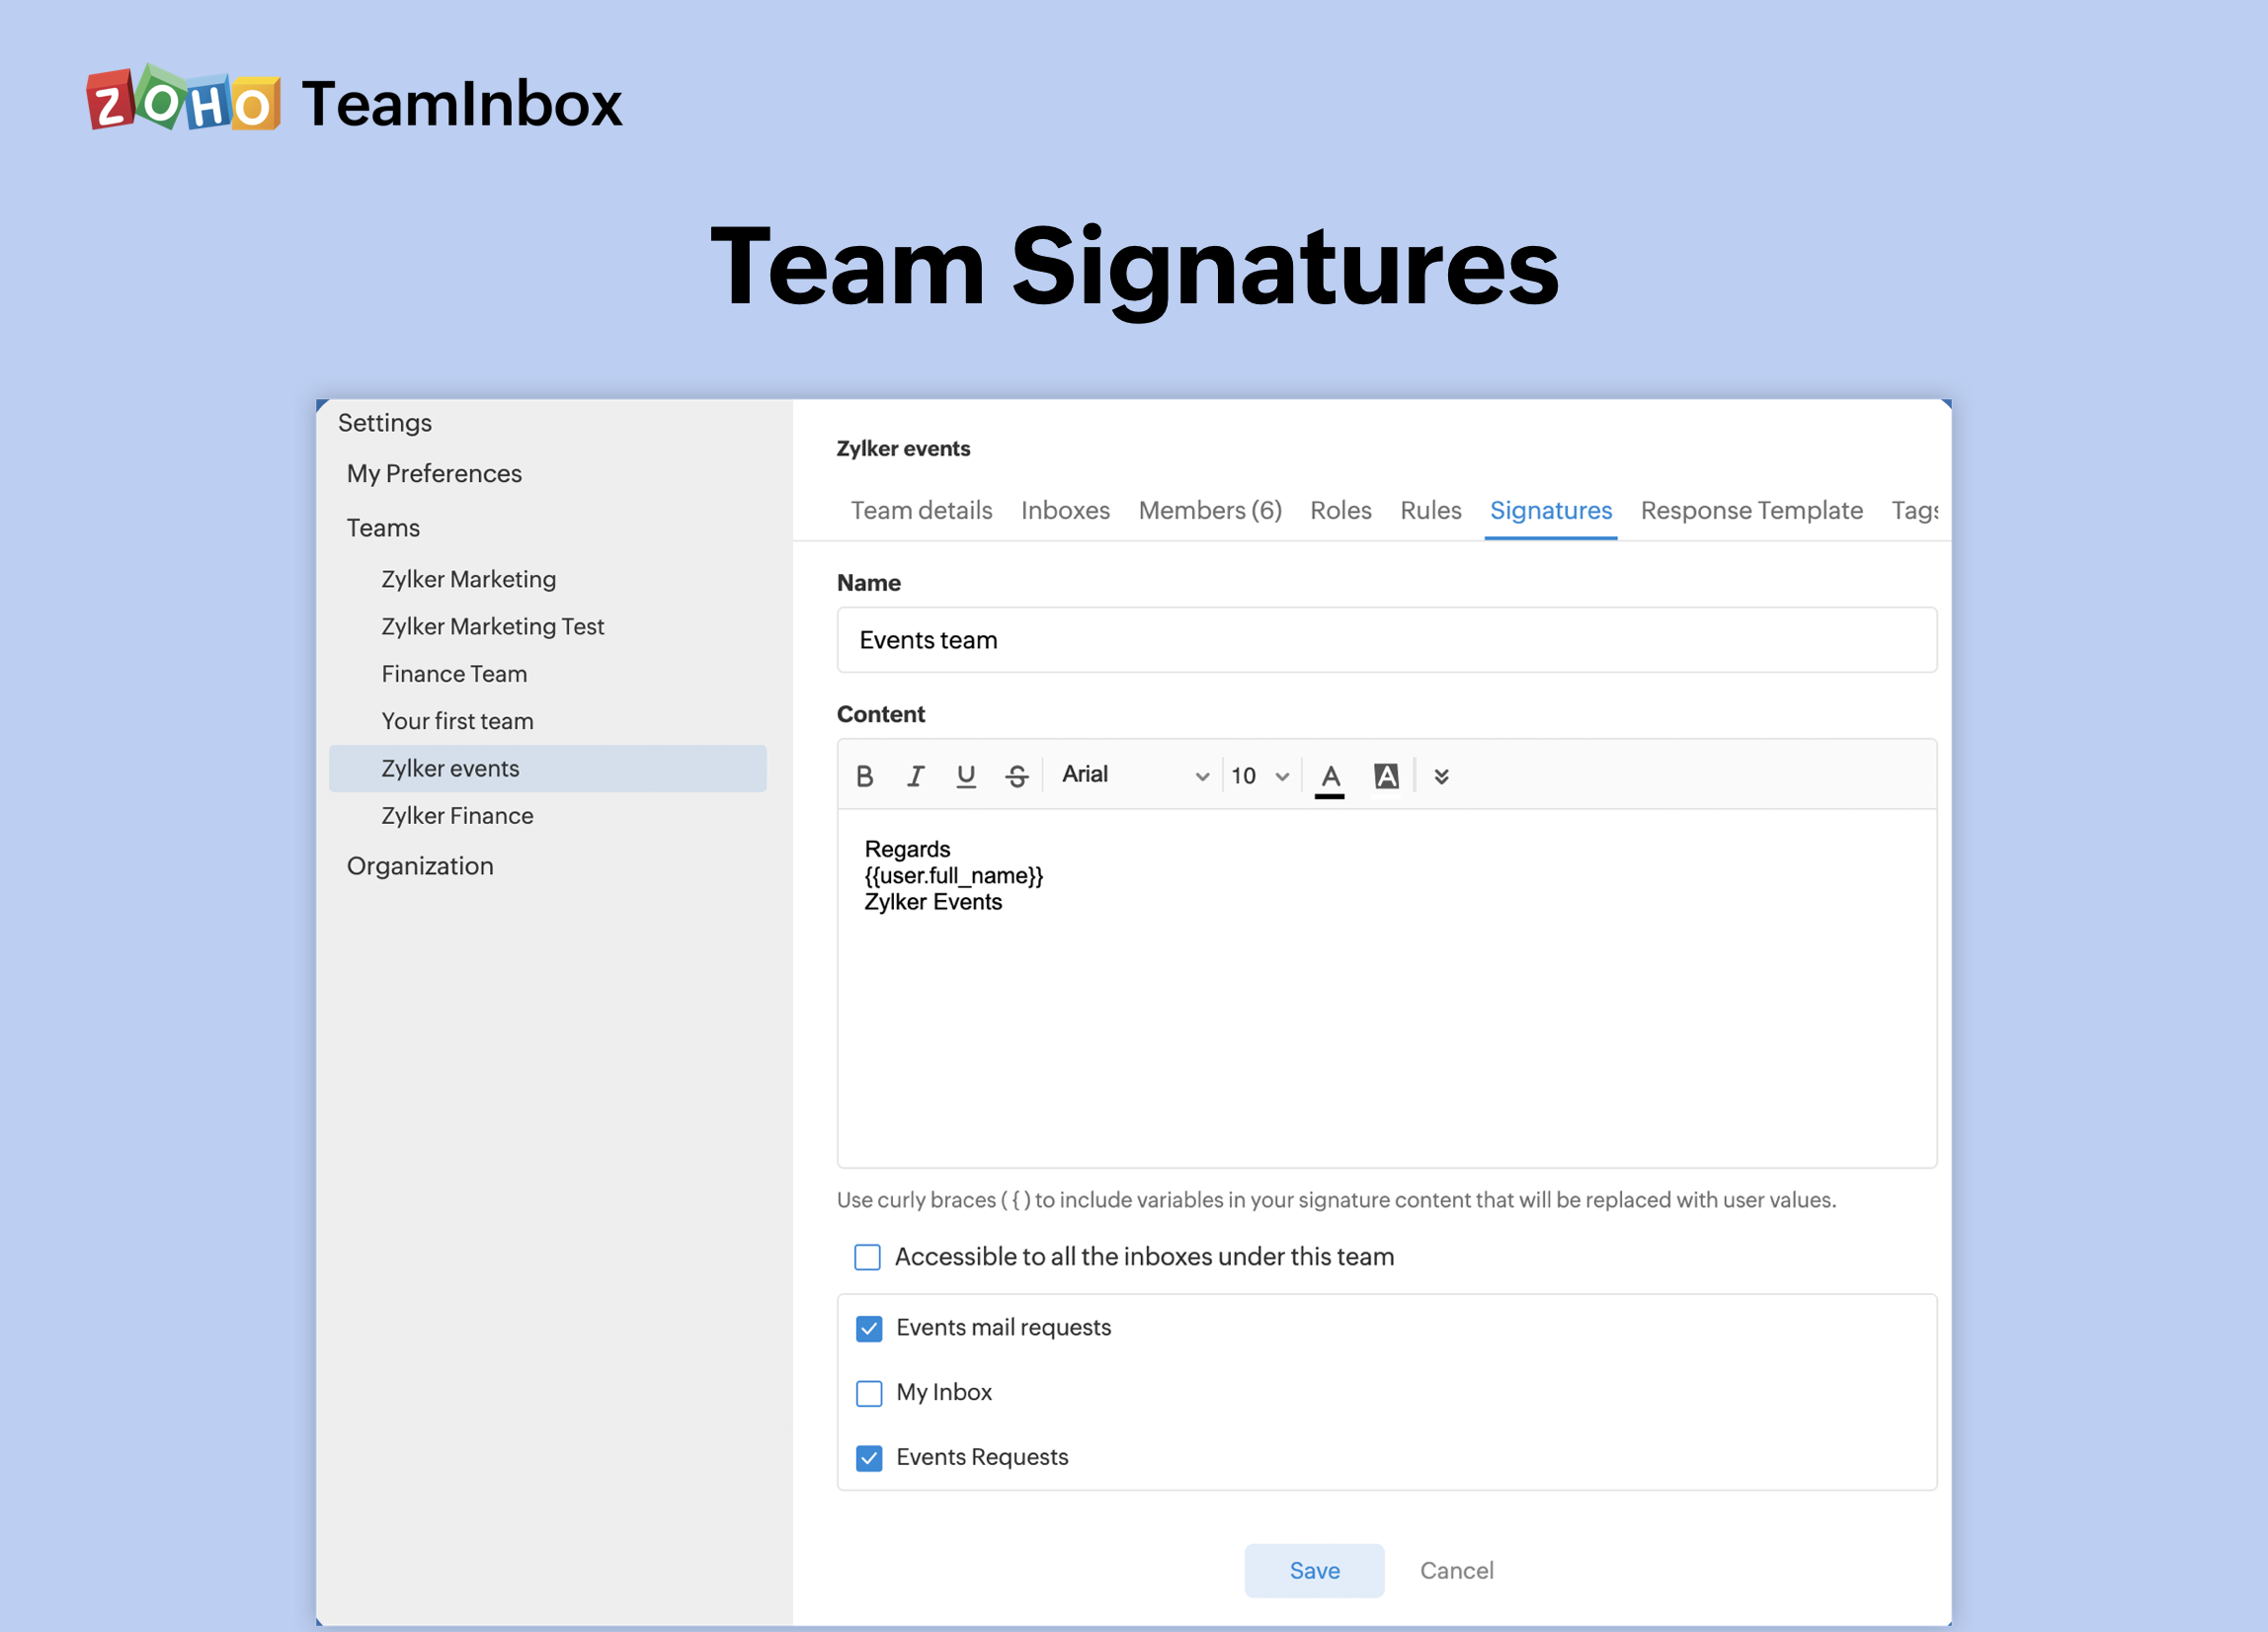 Zoho TeamInbox team signatures